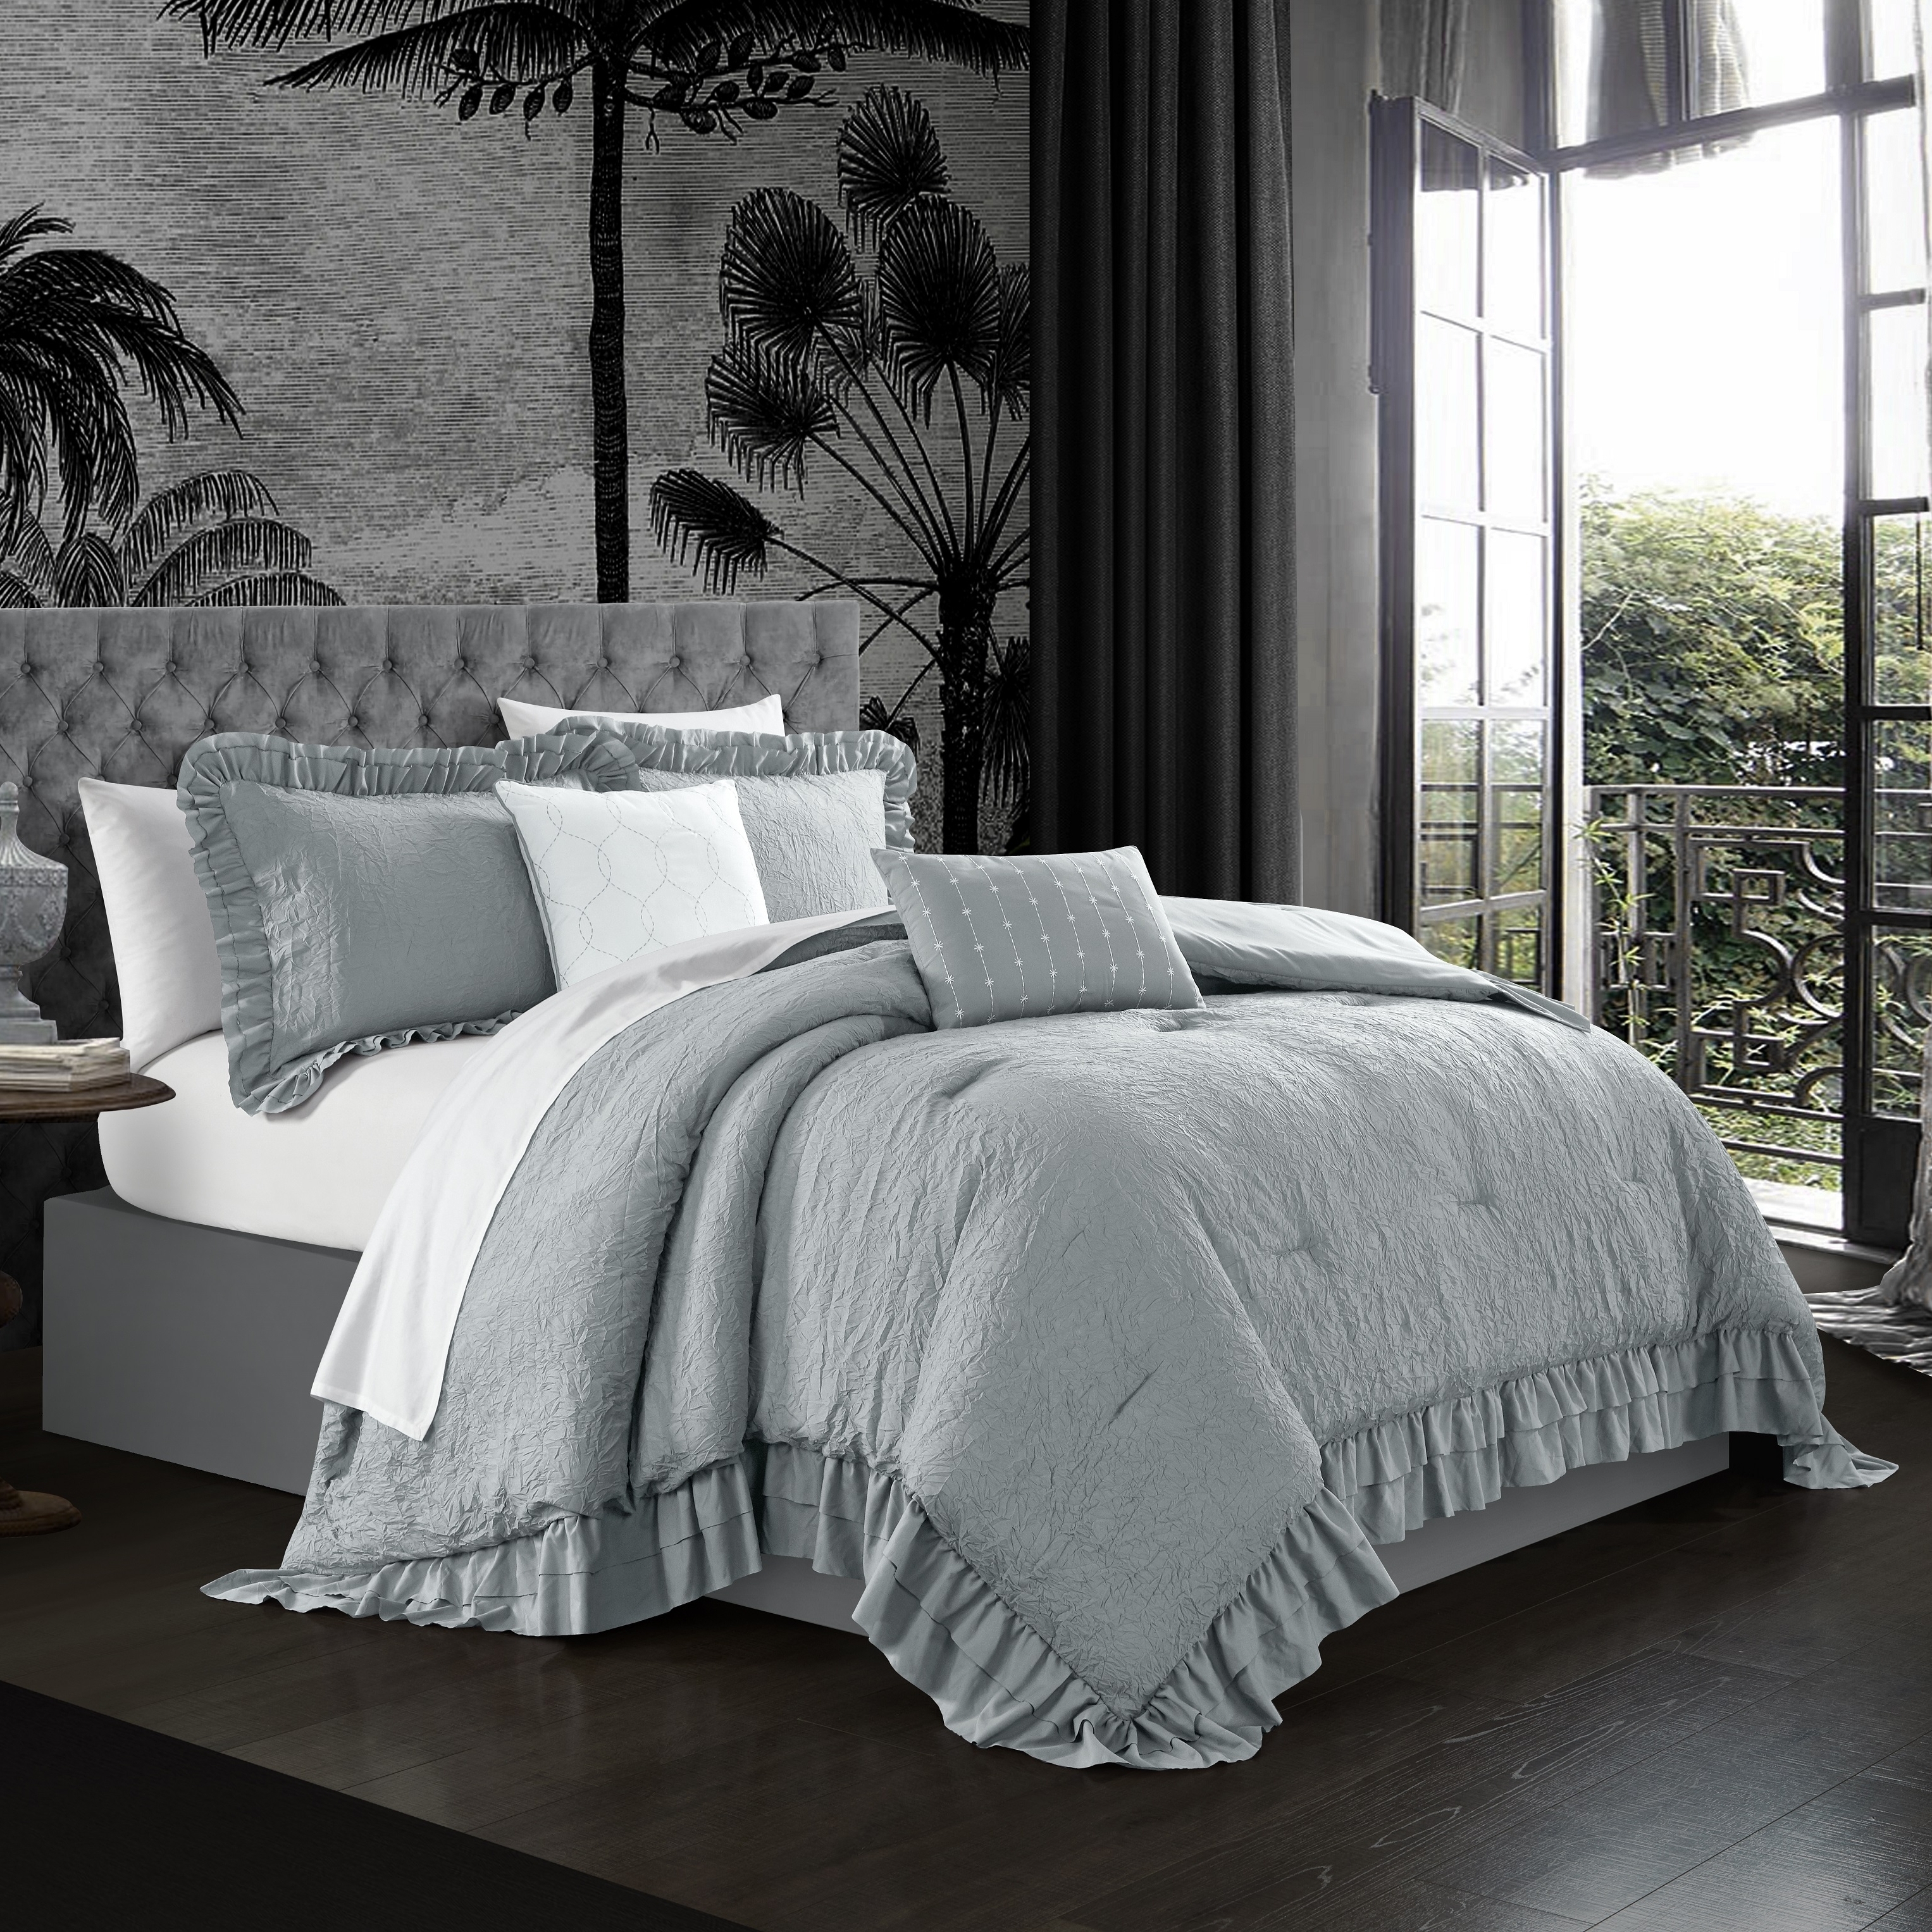 5 Piece Kensley Comforter Set Washed Crinkle Ruffled Flange Border Design Bedding - Beige, Queen